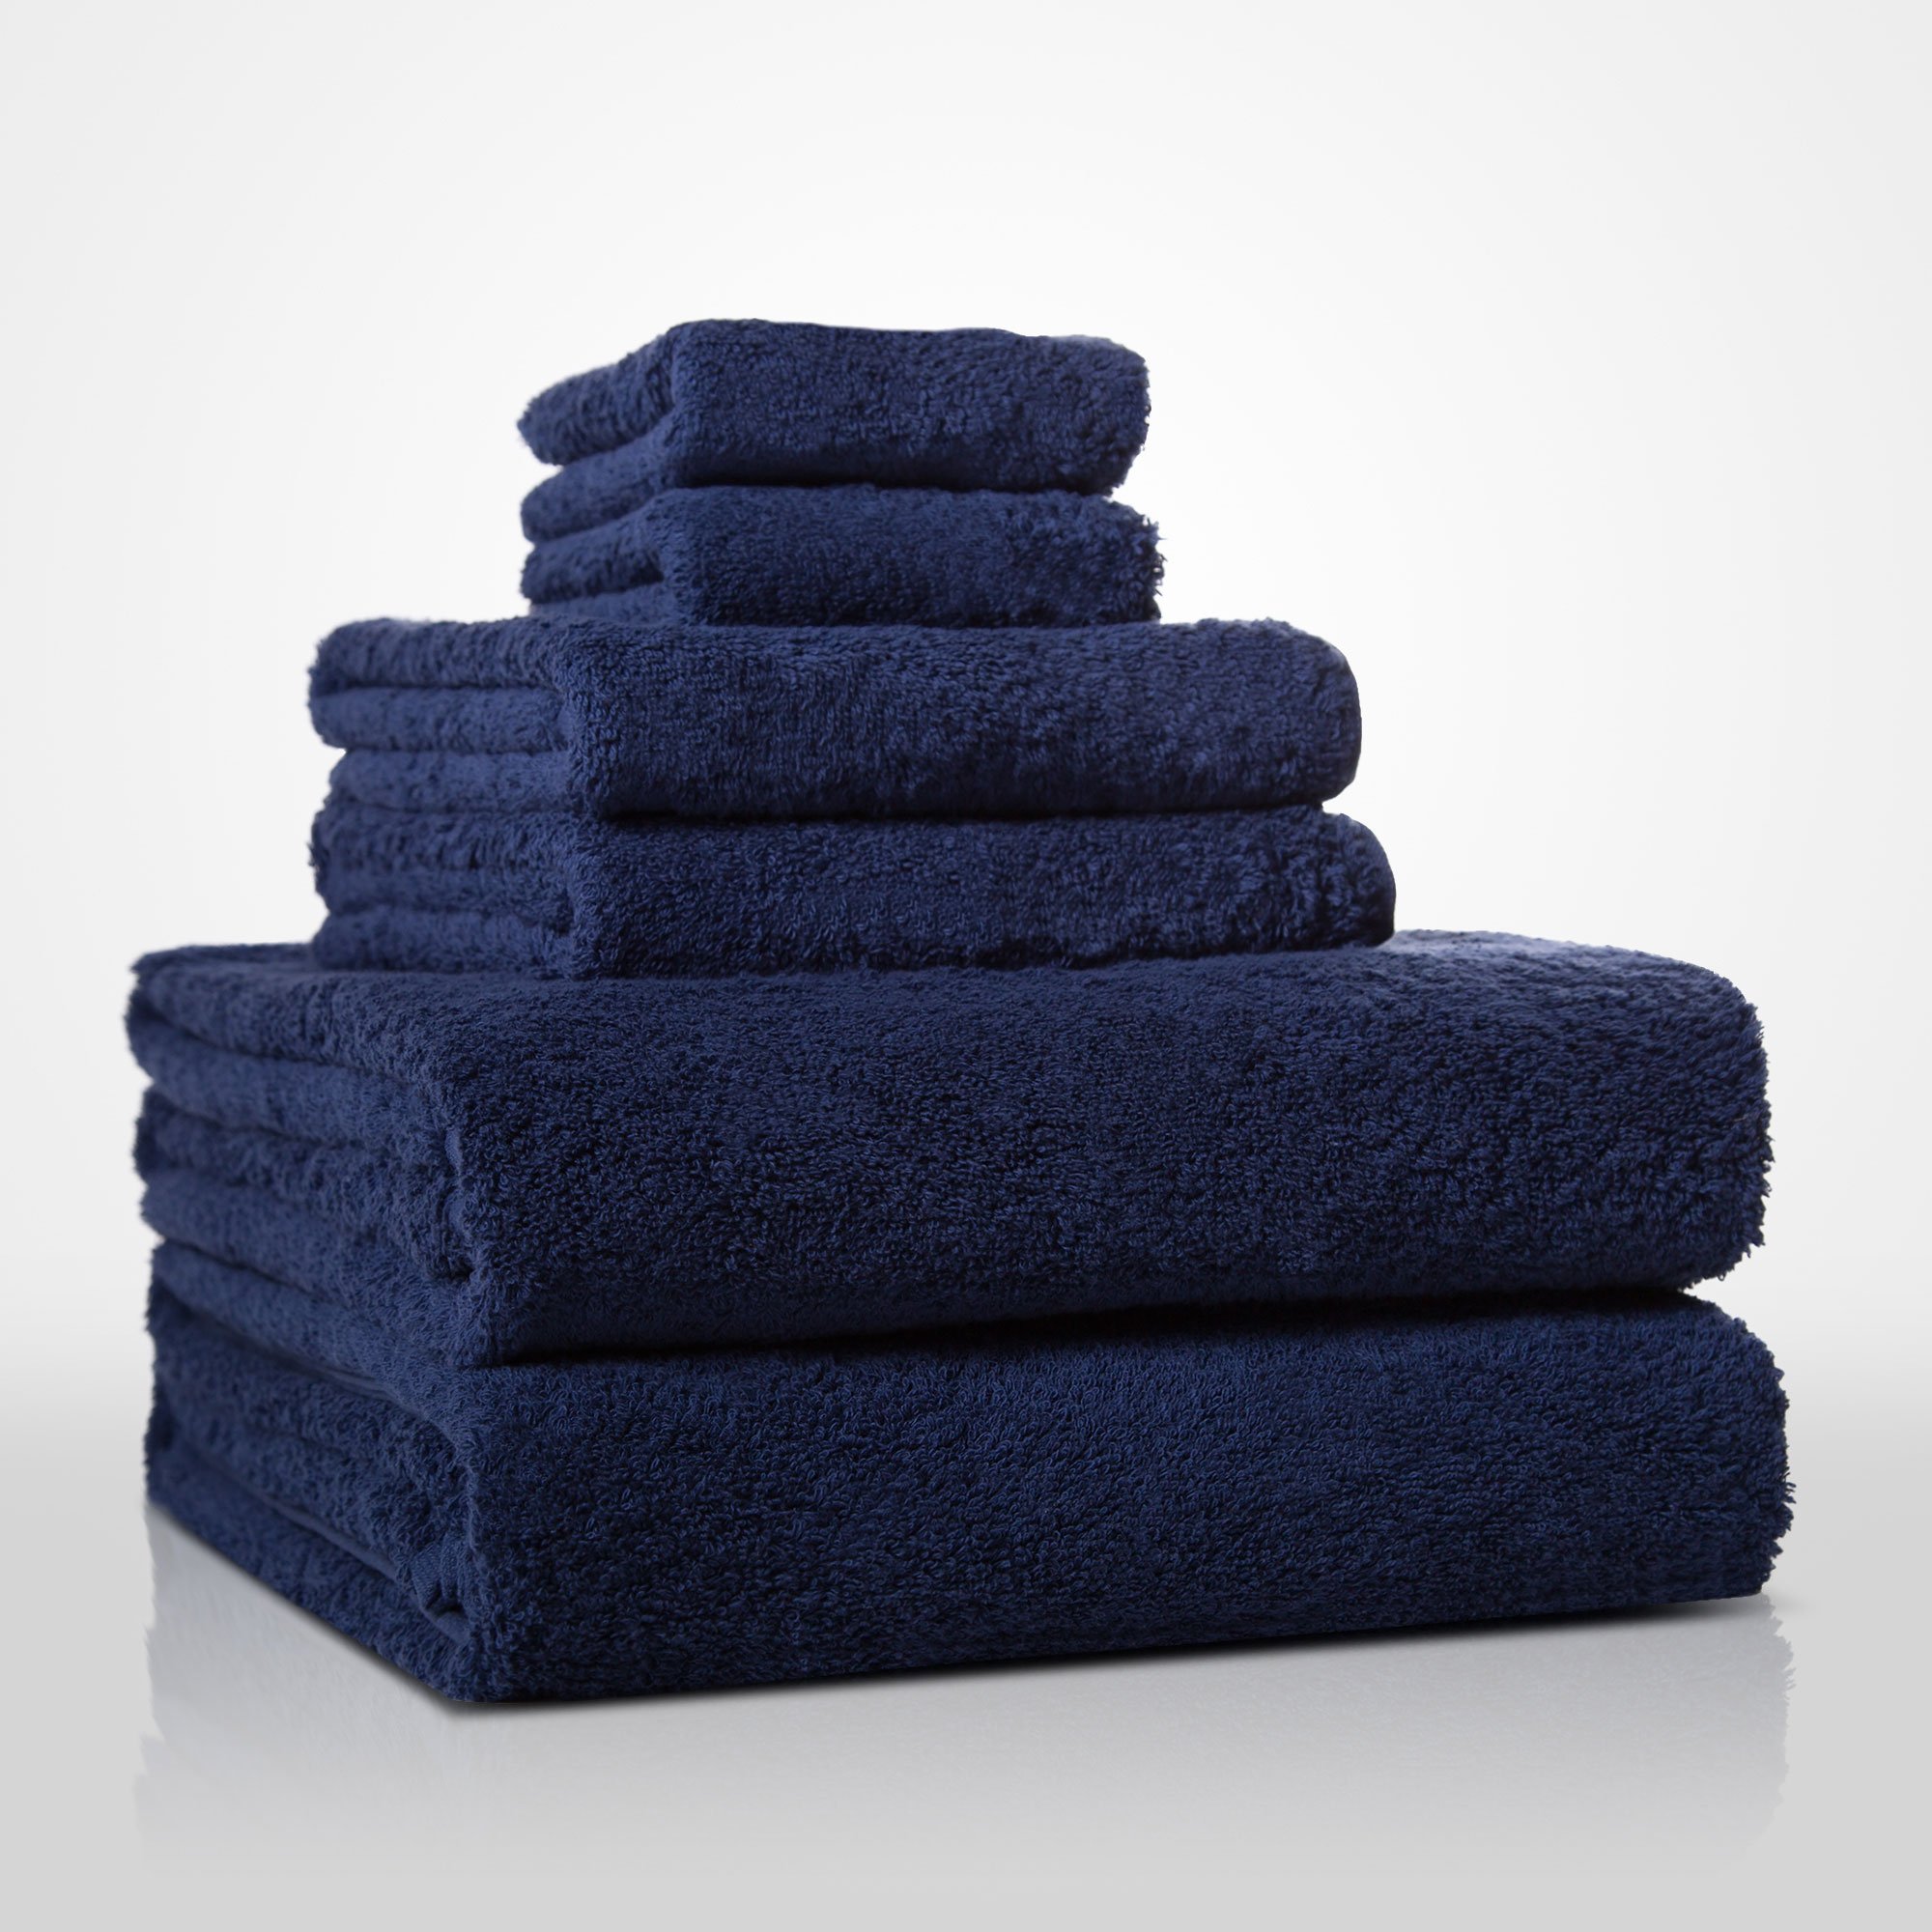 35"x 60" - 100% Turkish Cotton Navy Blue Terry Bath Towel-Robemart.com